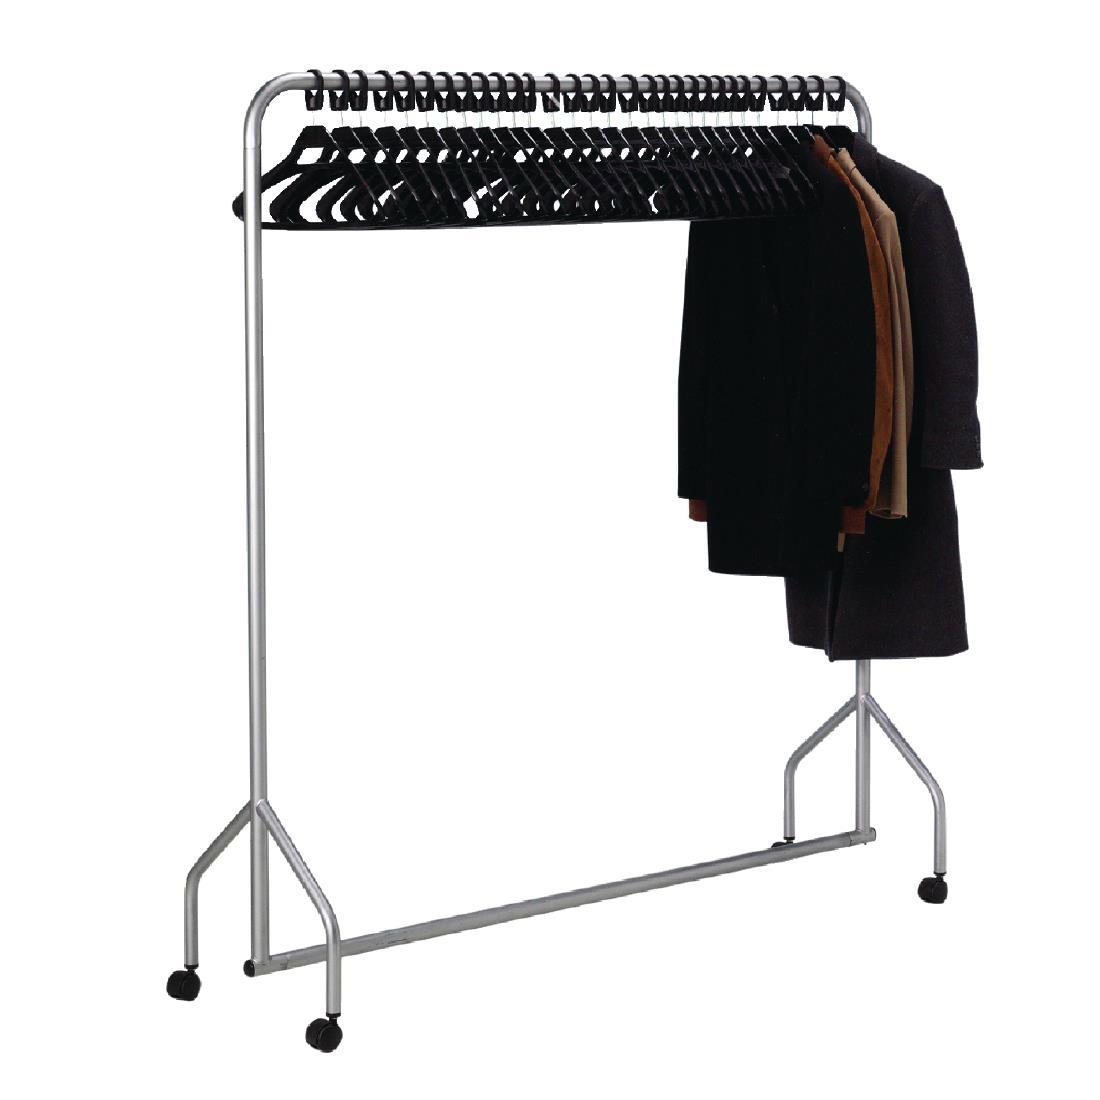 Metal Garment Rail with Hangers - T441  - 1